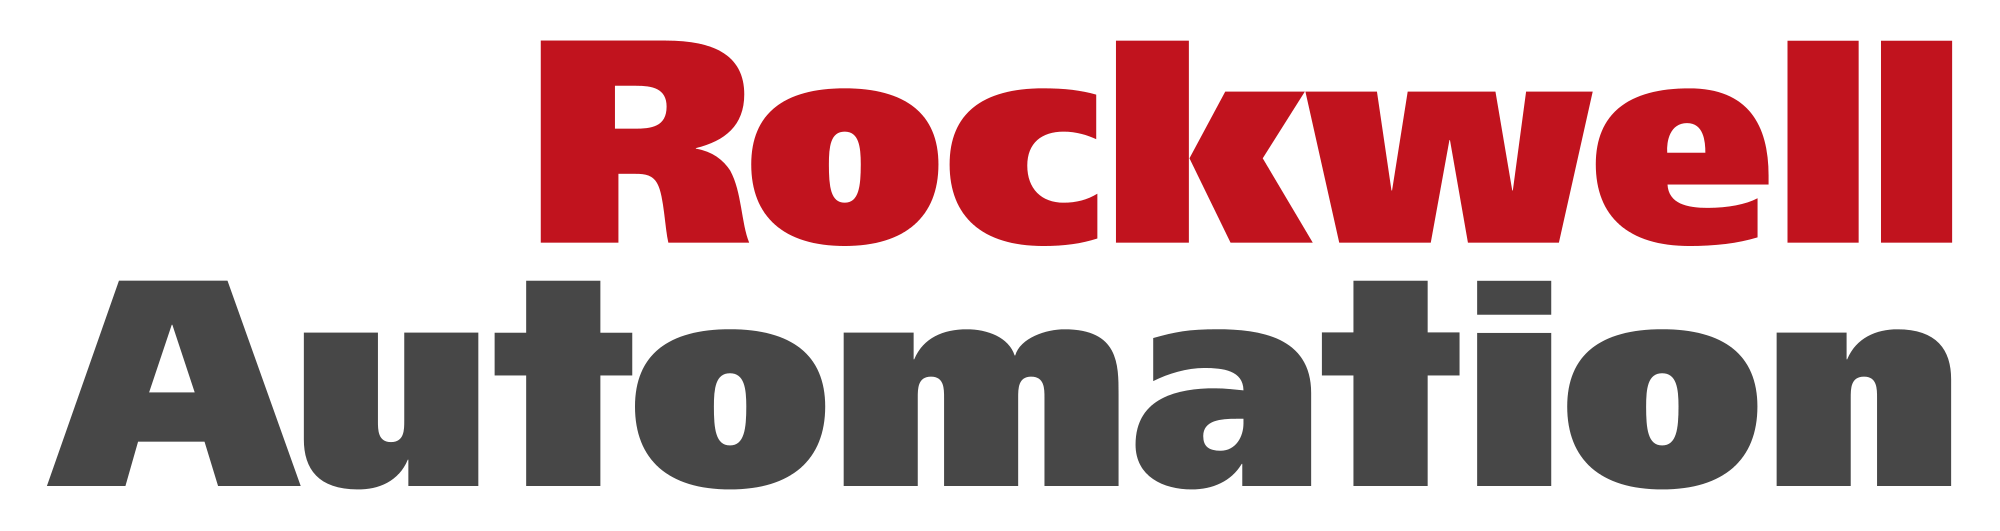 Rockwell Automation Logo - File:Rockwell Automation logo.svg - Wikimedia Commons